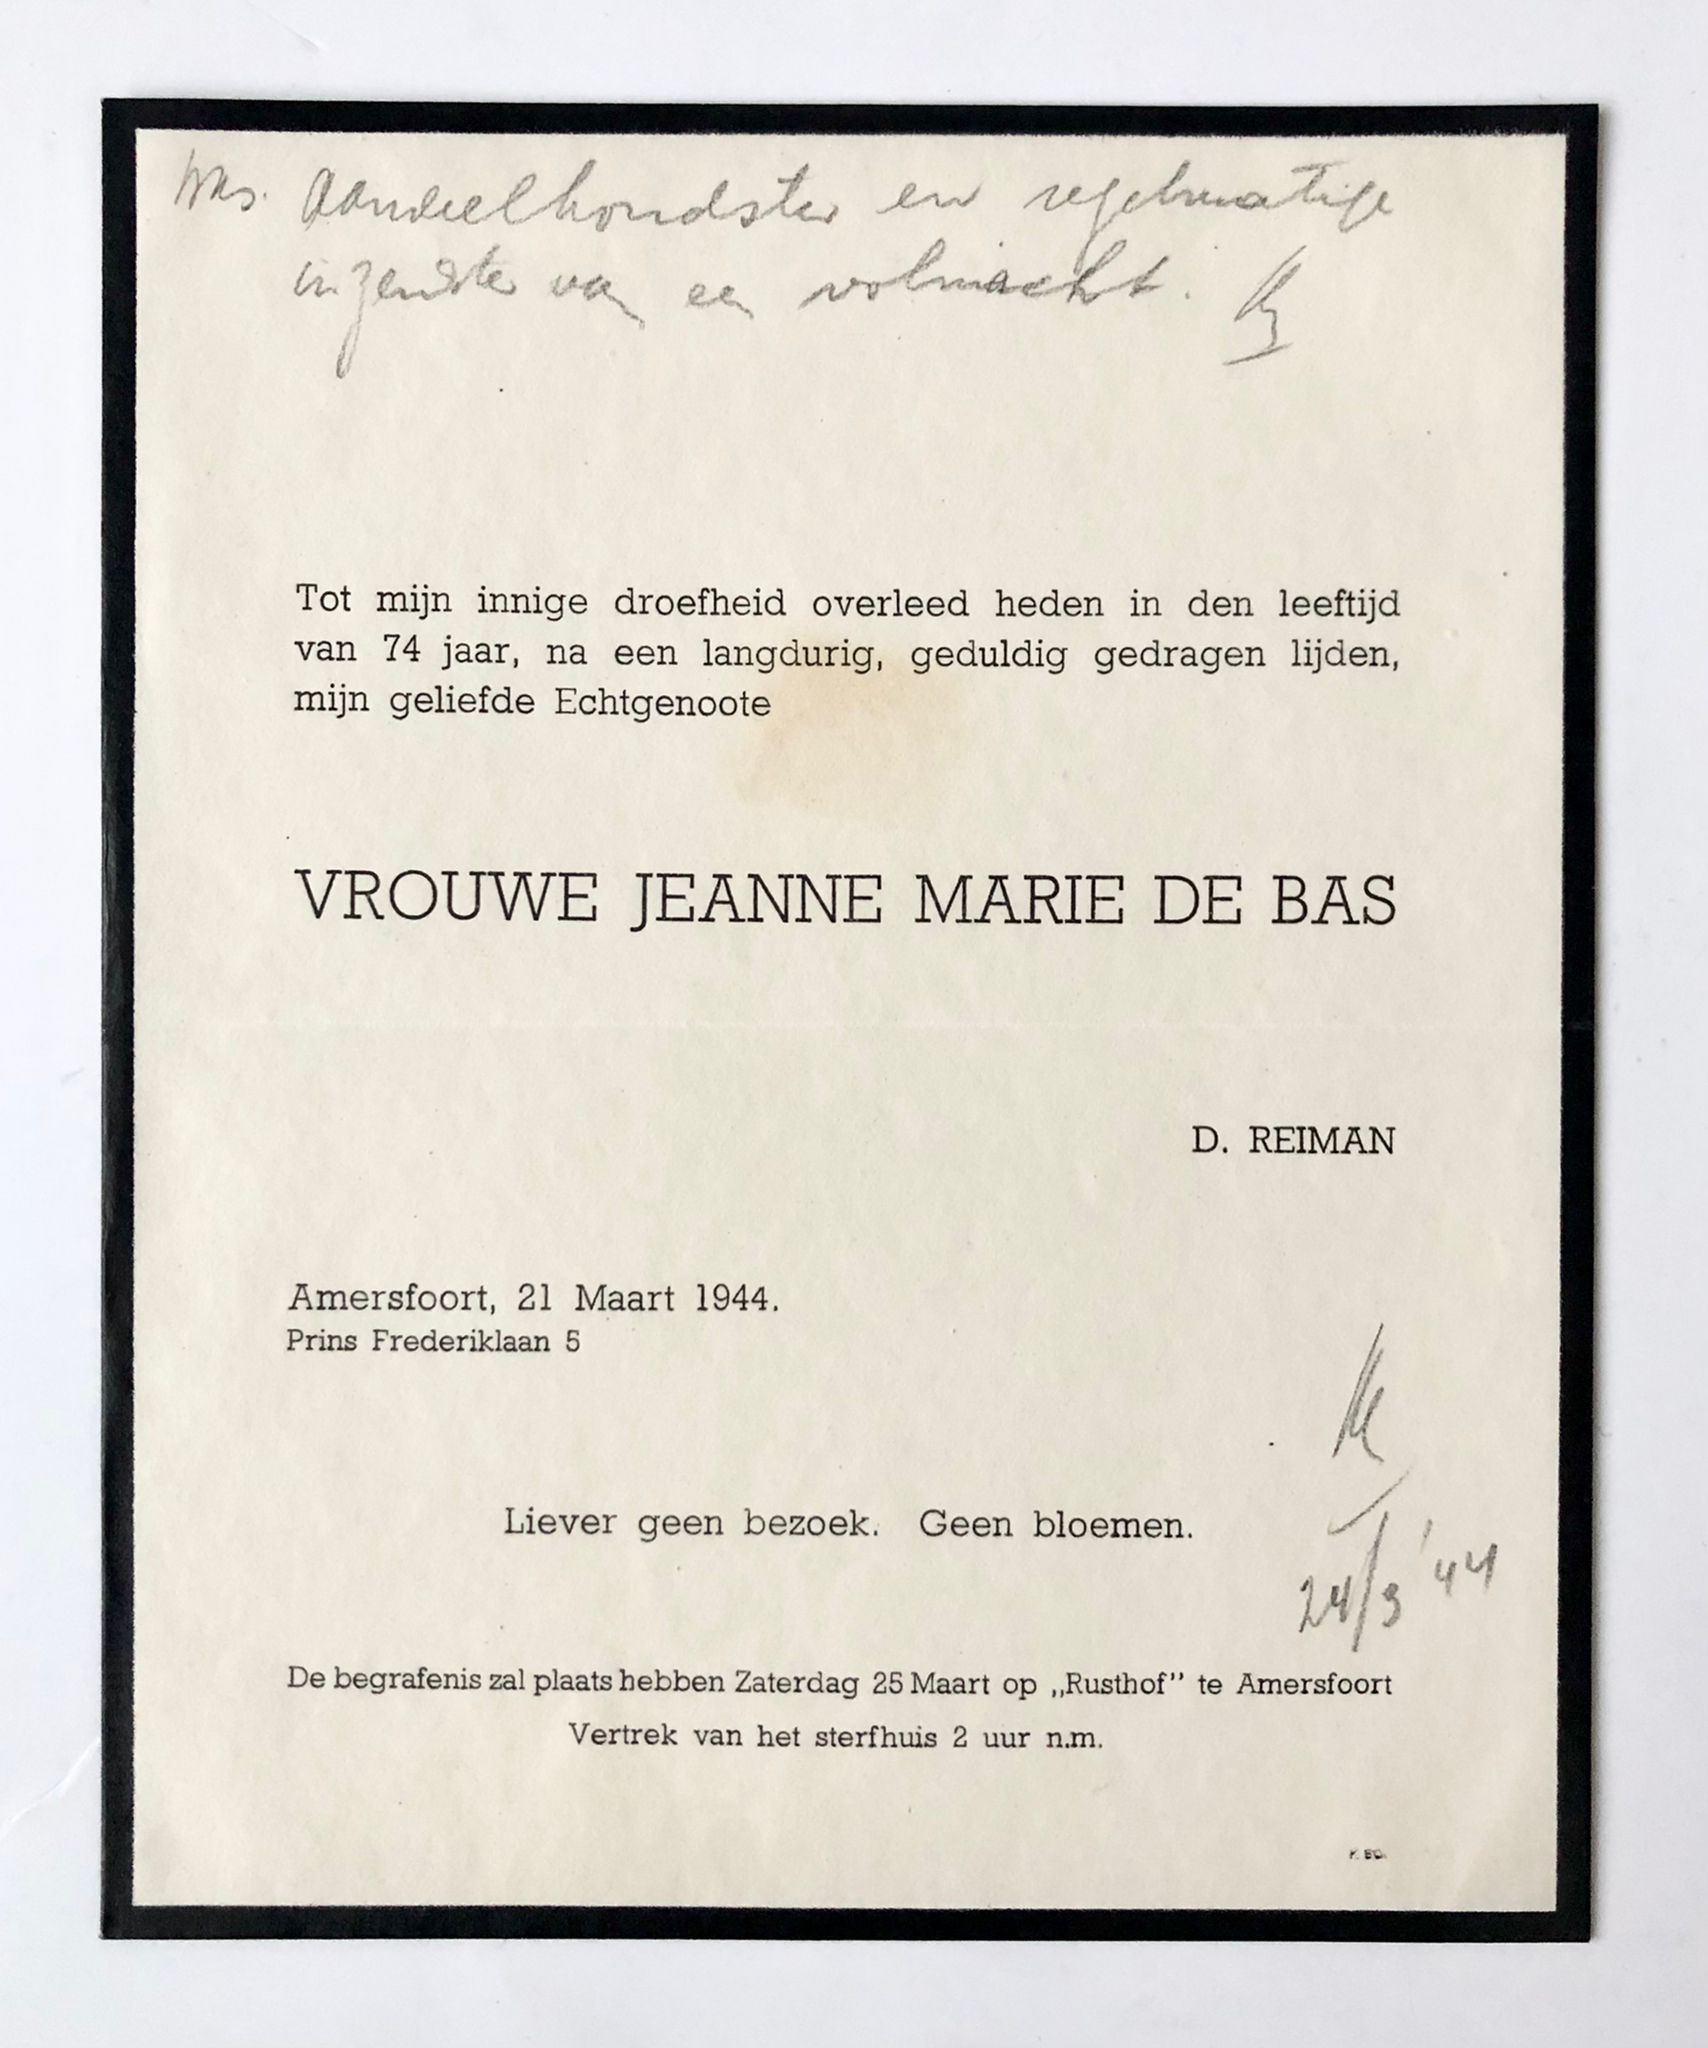  - [Printed death announcement 1944] Death announcement for Vrouwe Jeanne Marie (Reiman) de Bas. Amersfoort, 1944,m 1 p.